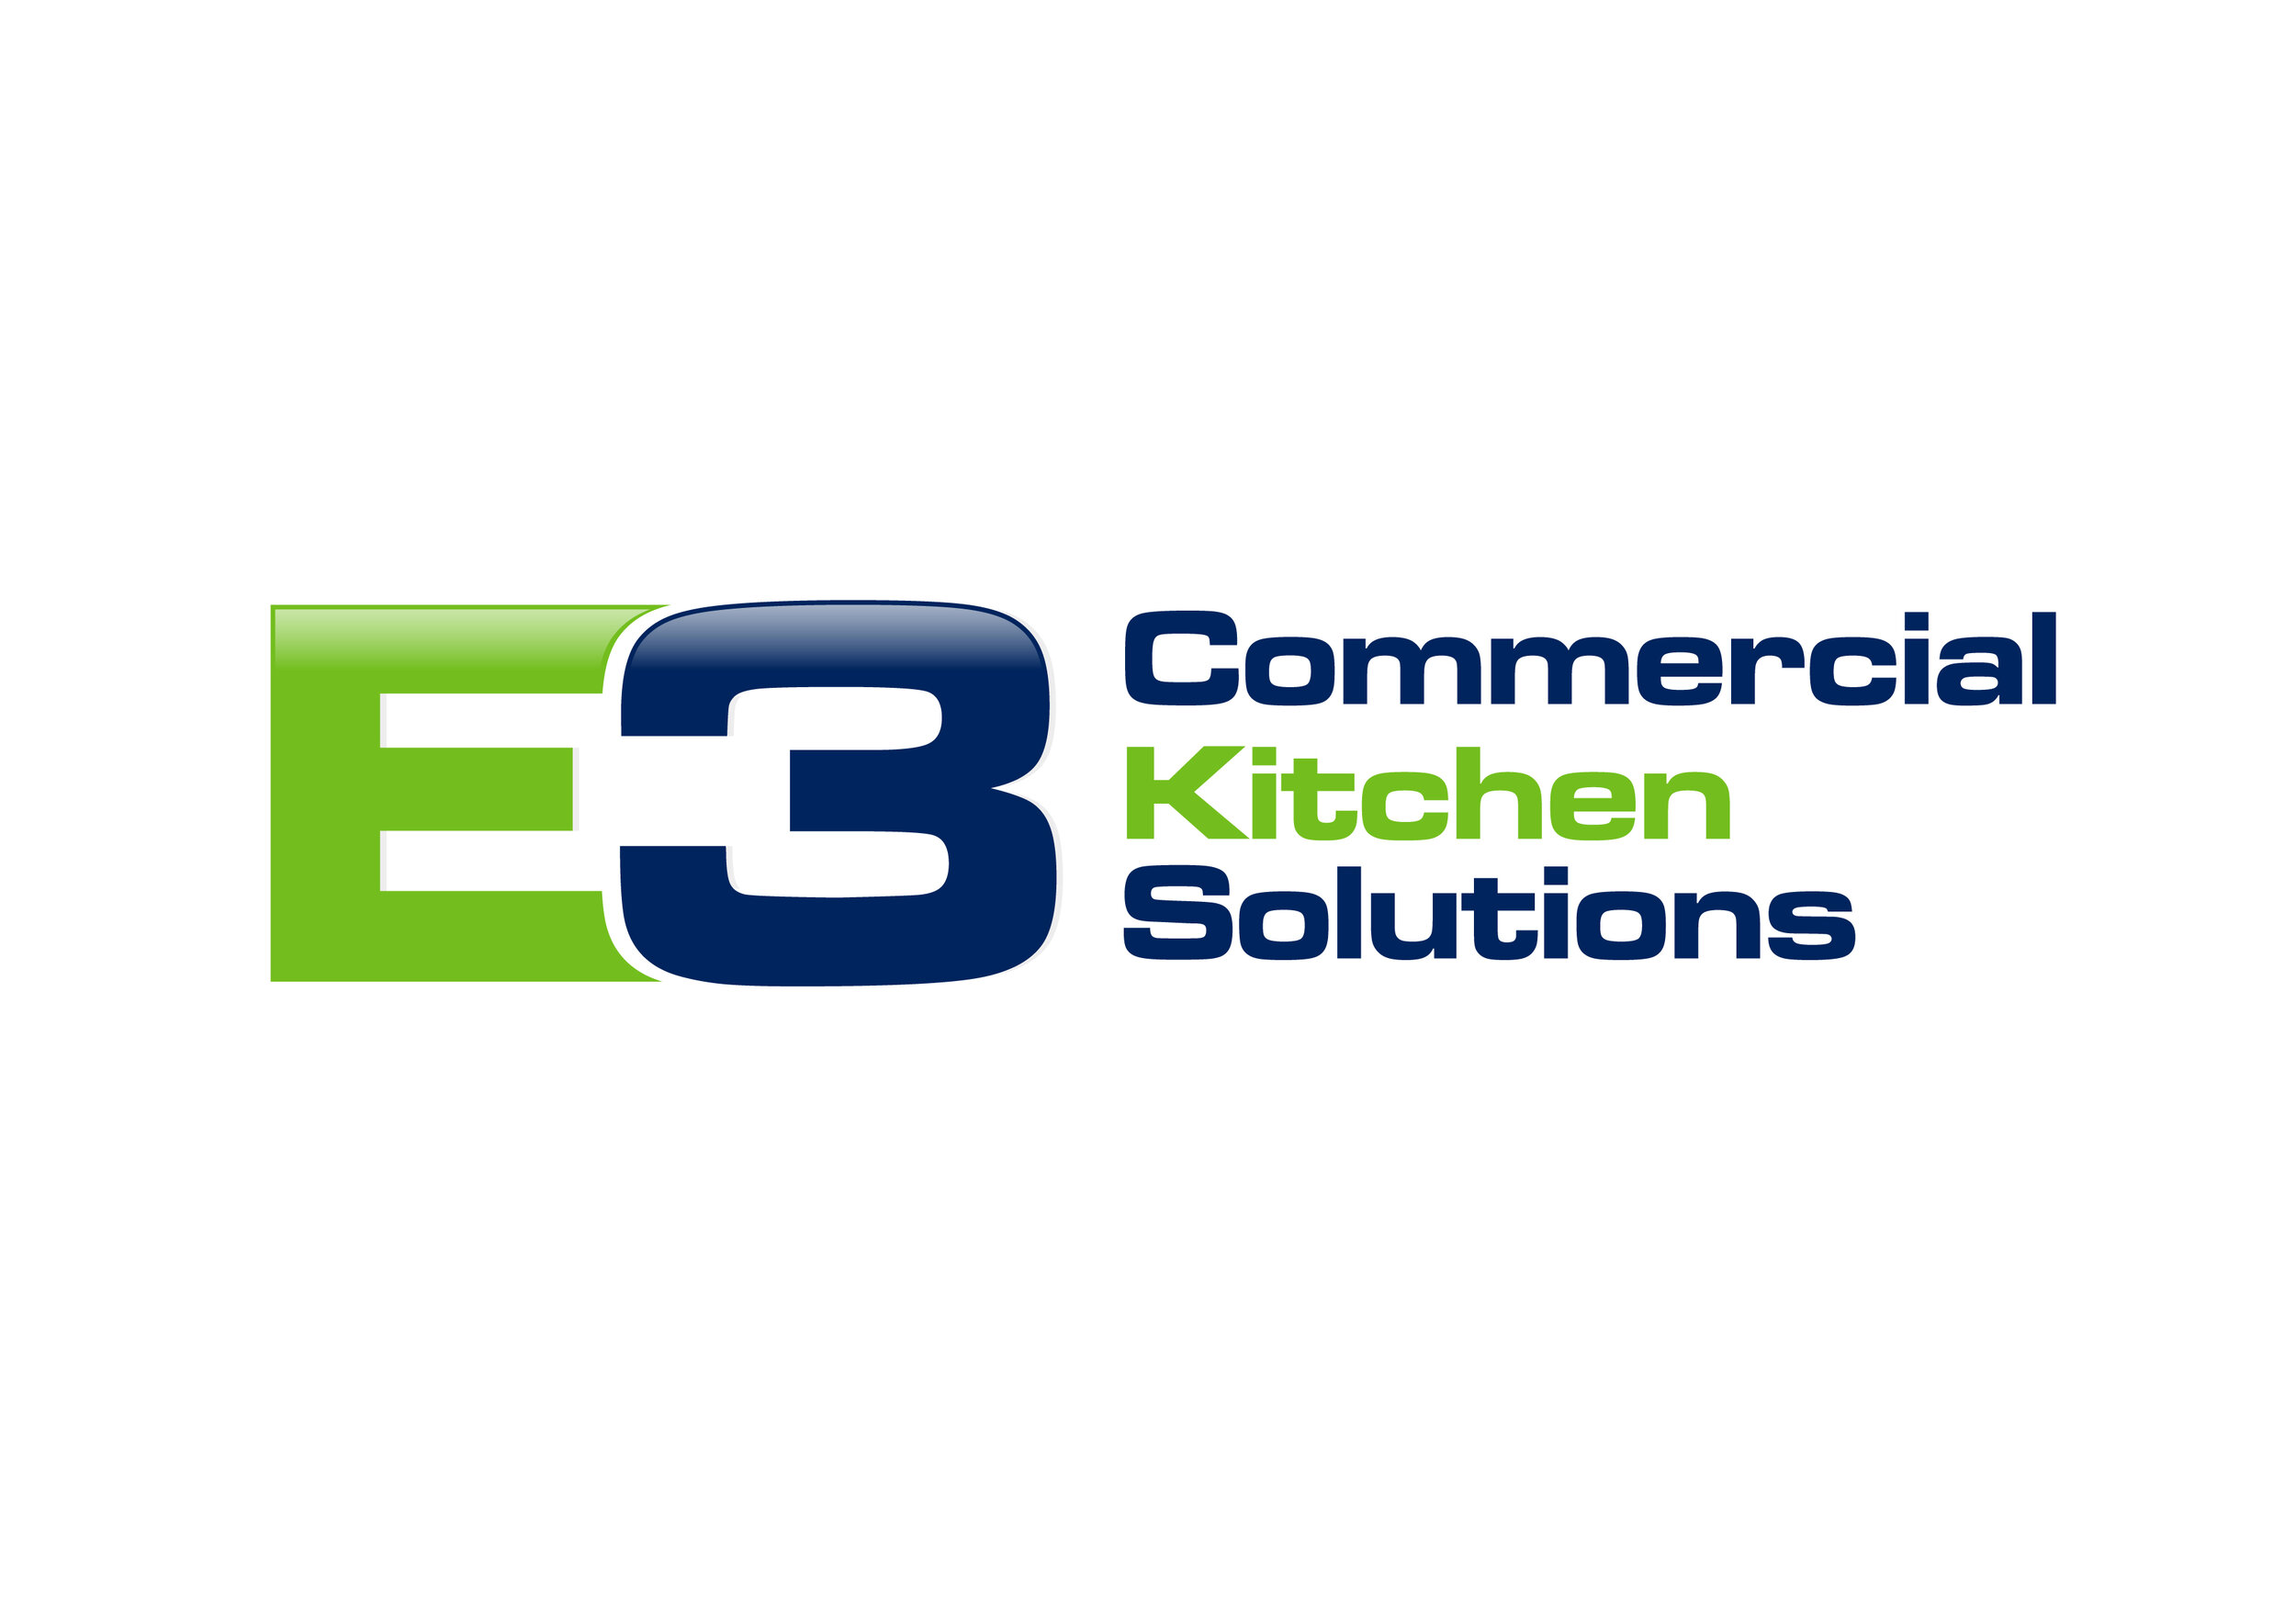 E3 Commerical Kitchen Solutions.jpg